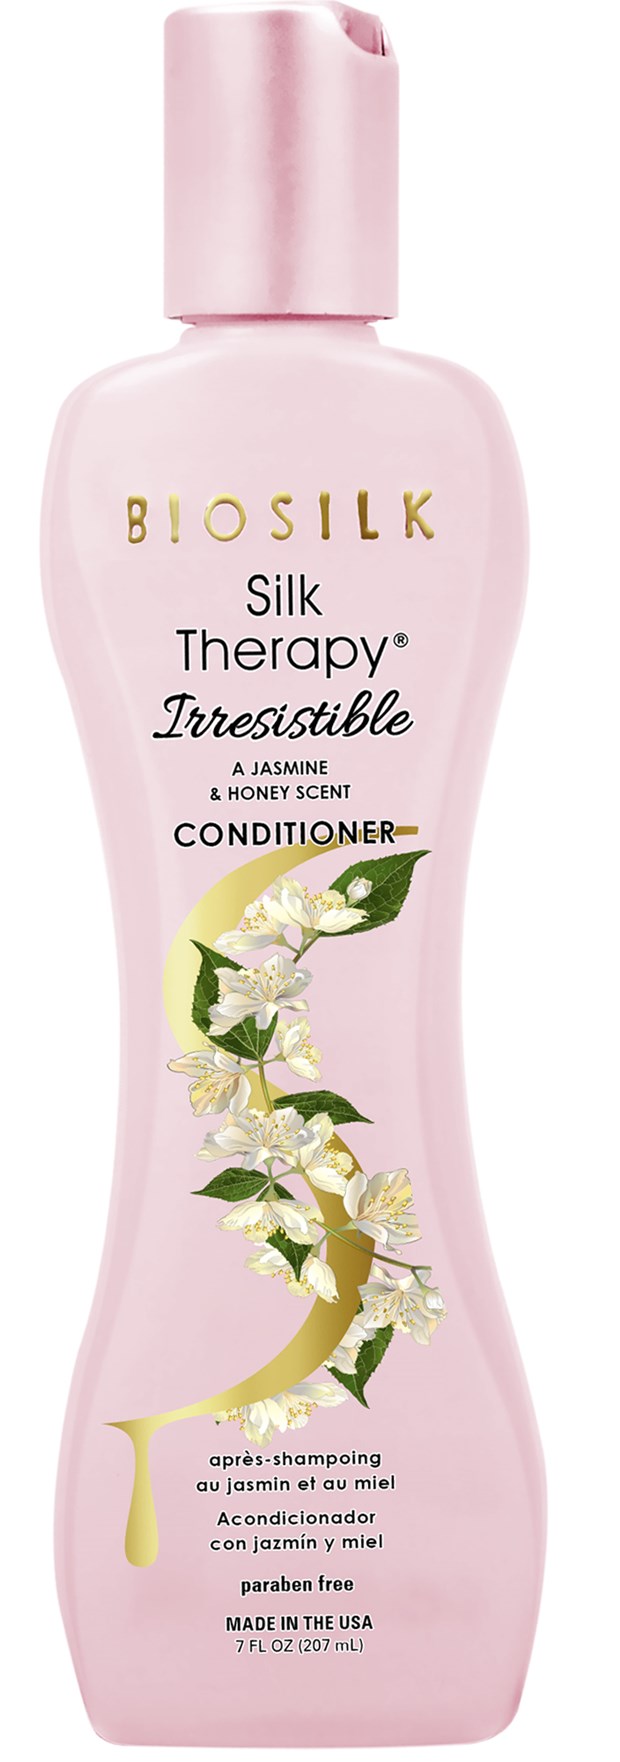 Silk Therapy Irresistible Conditioner